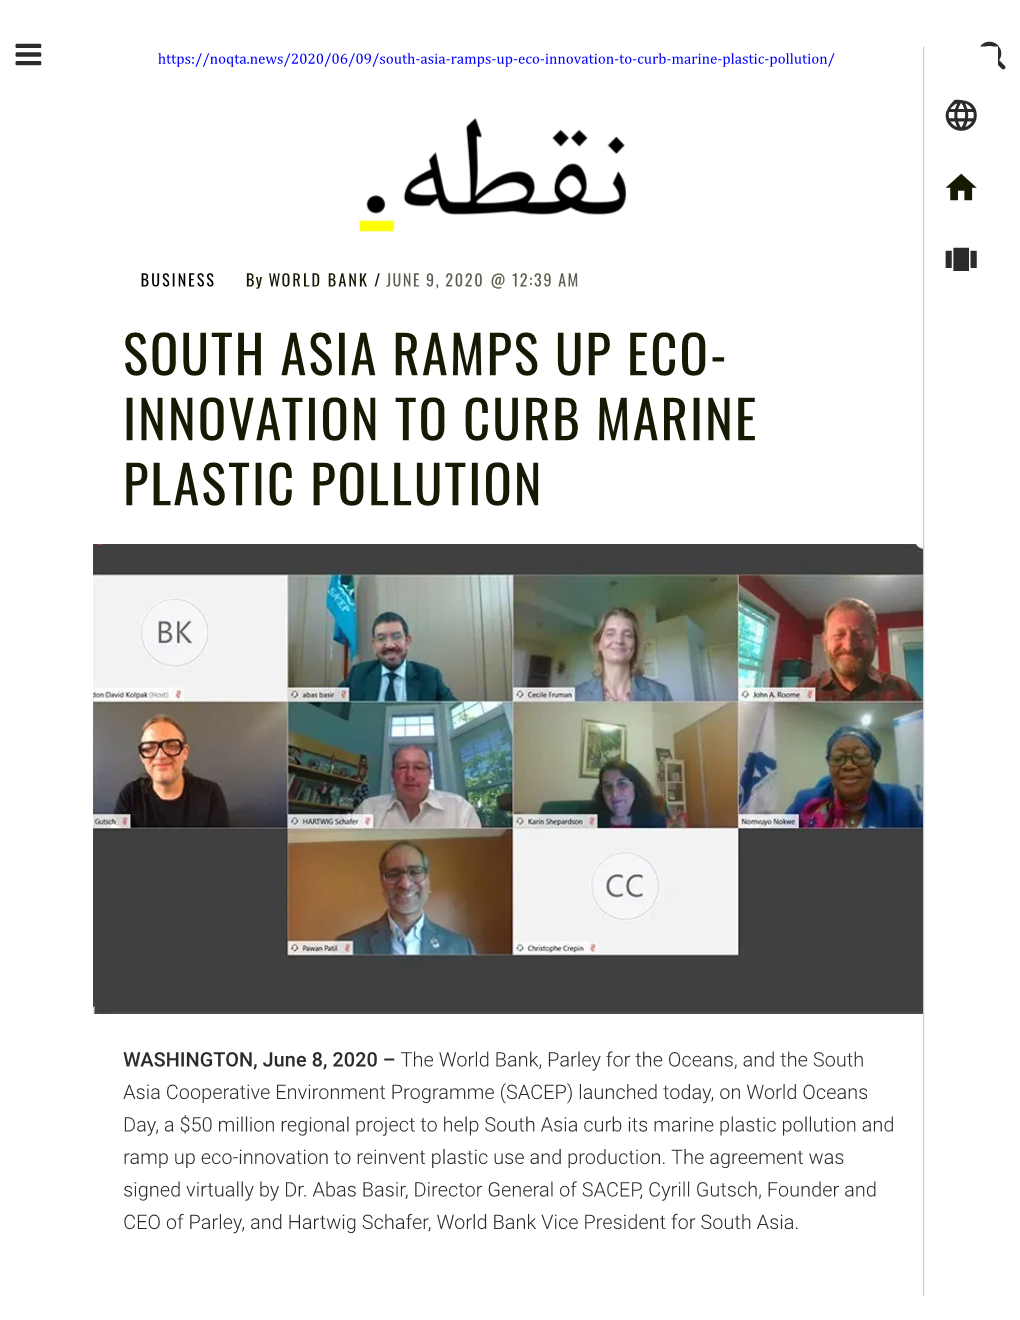 Innovation to Curb Marine Plastic Pollution